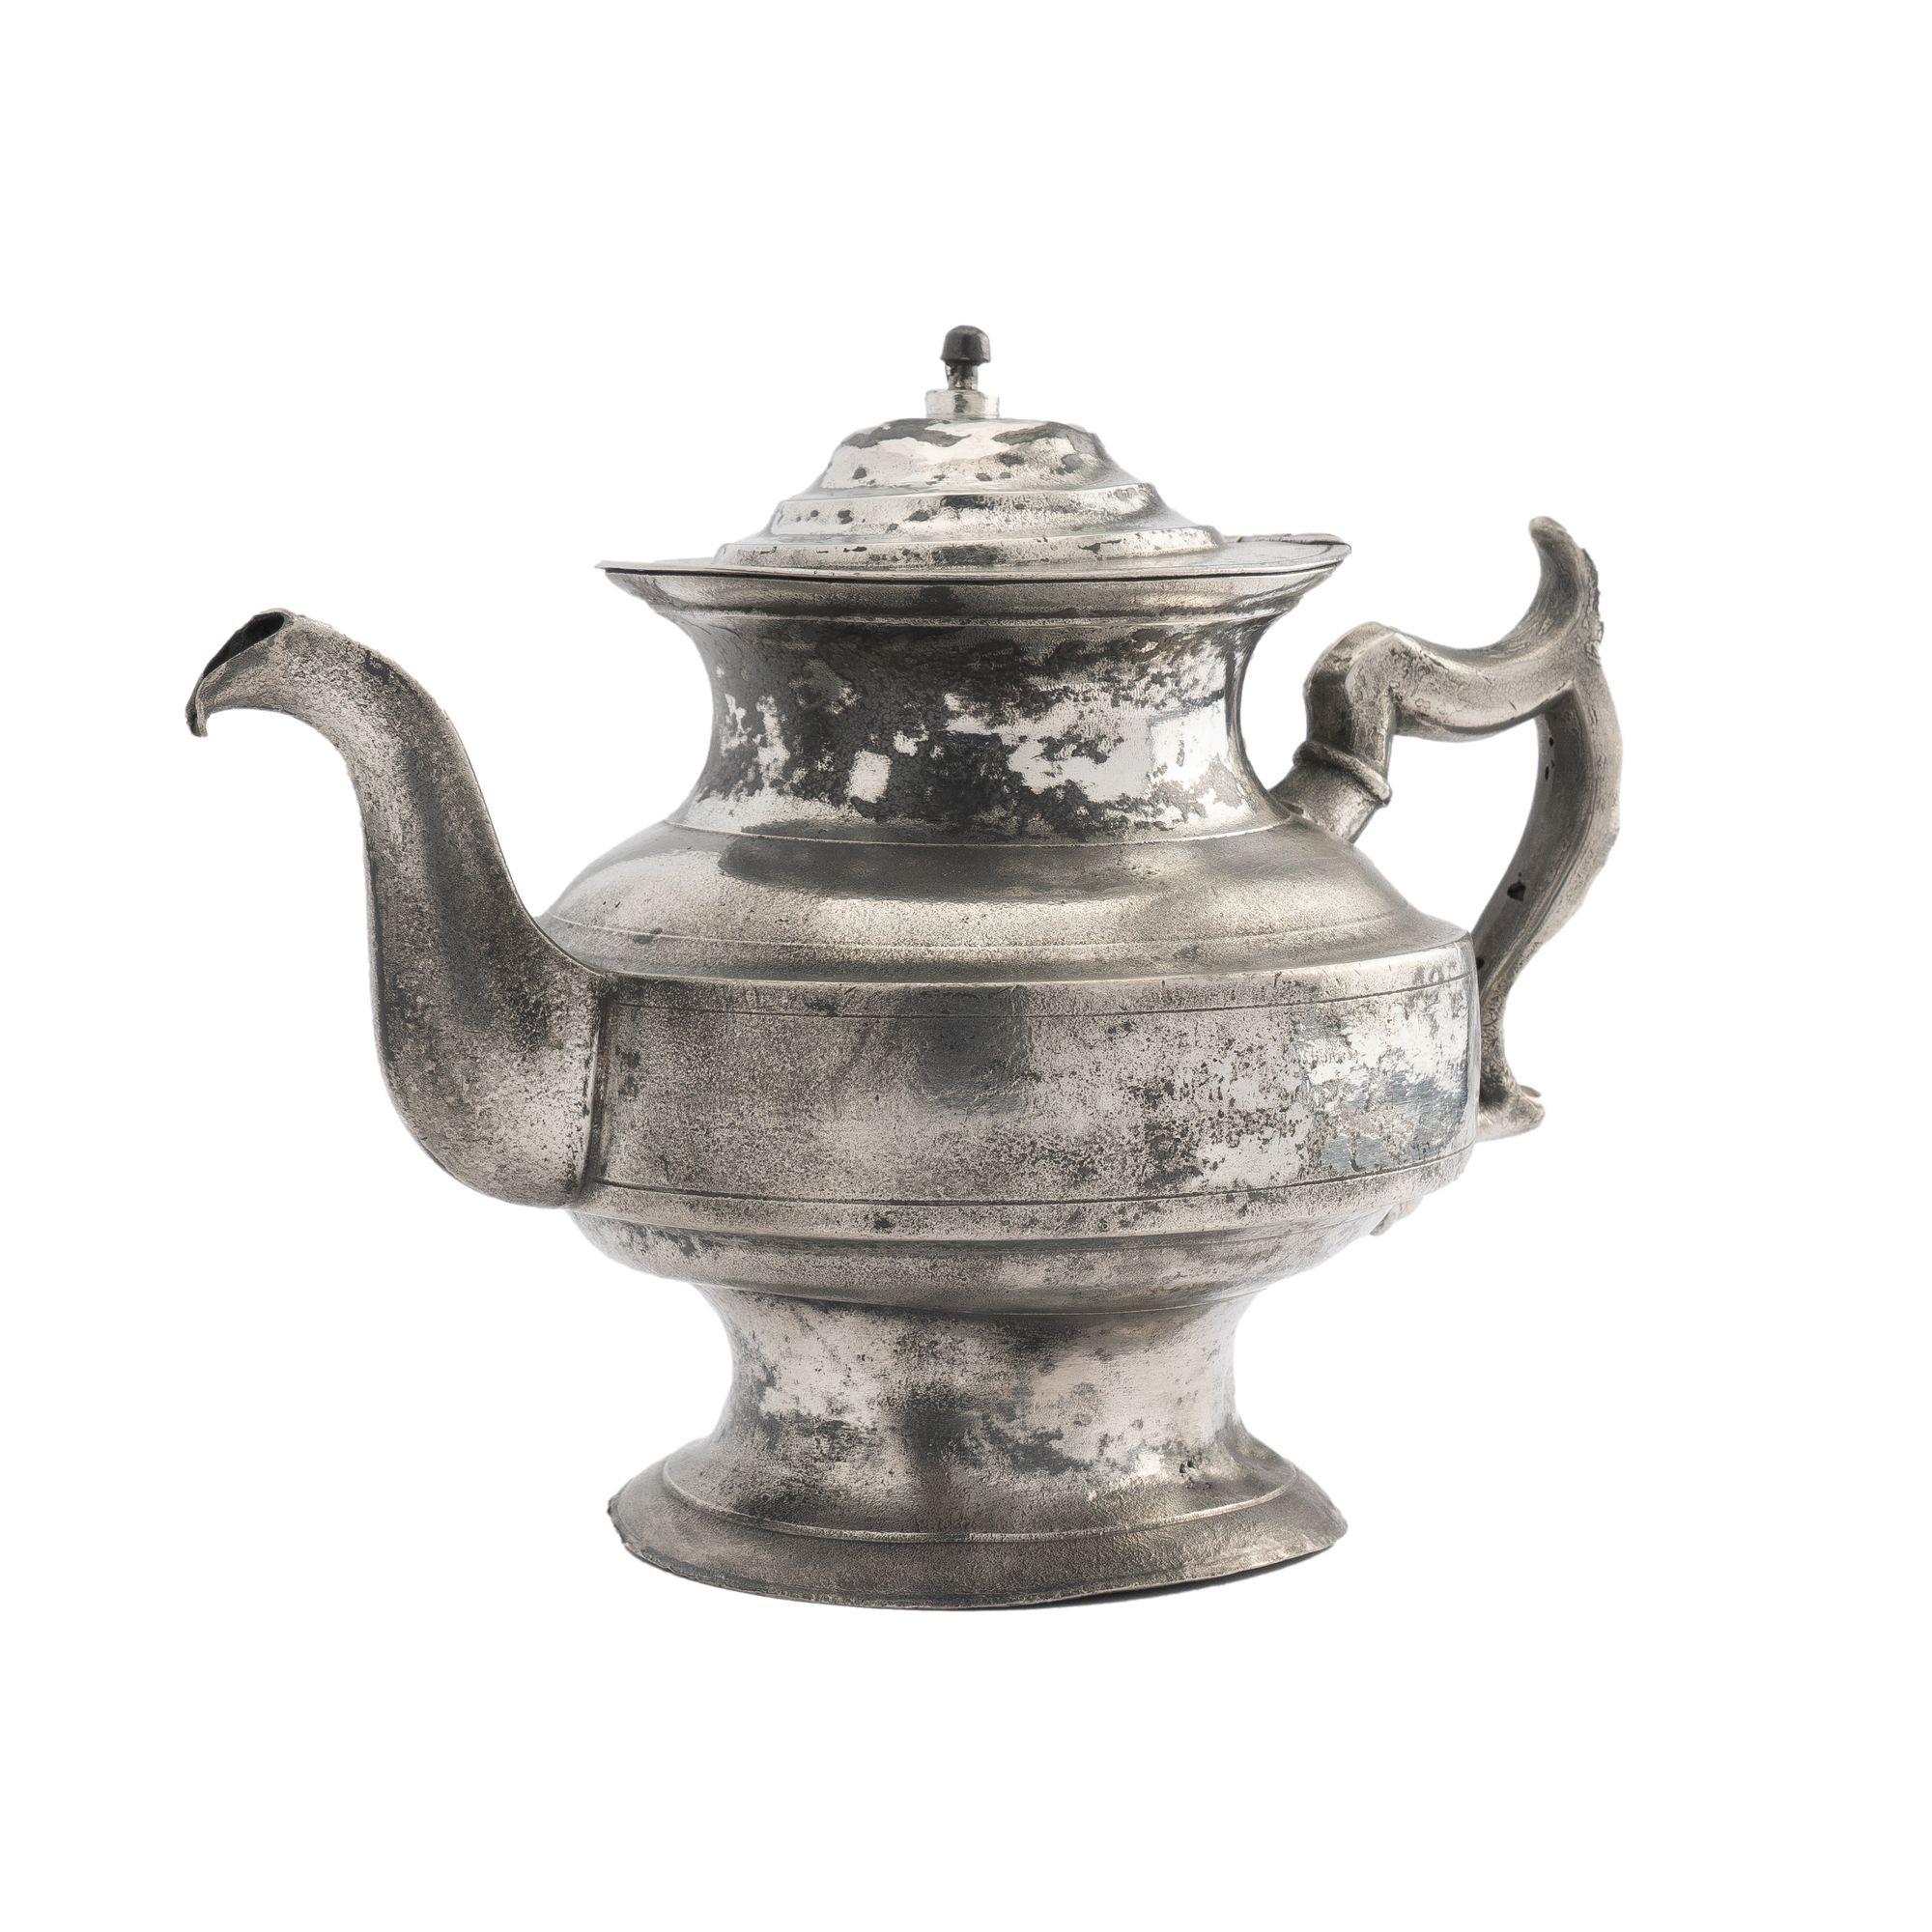 American pewter tea pot with a distressed exterior finish.
Meridan, Connecticut, circa 1820.